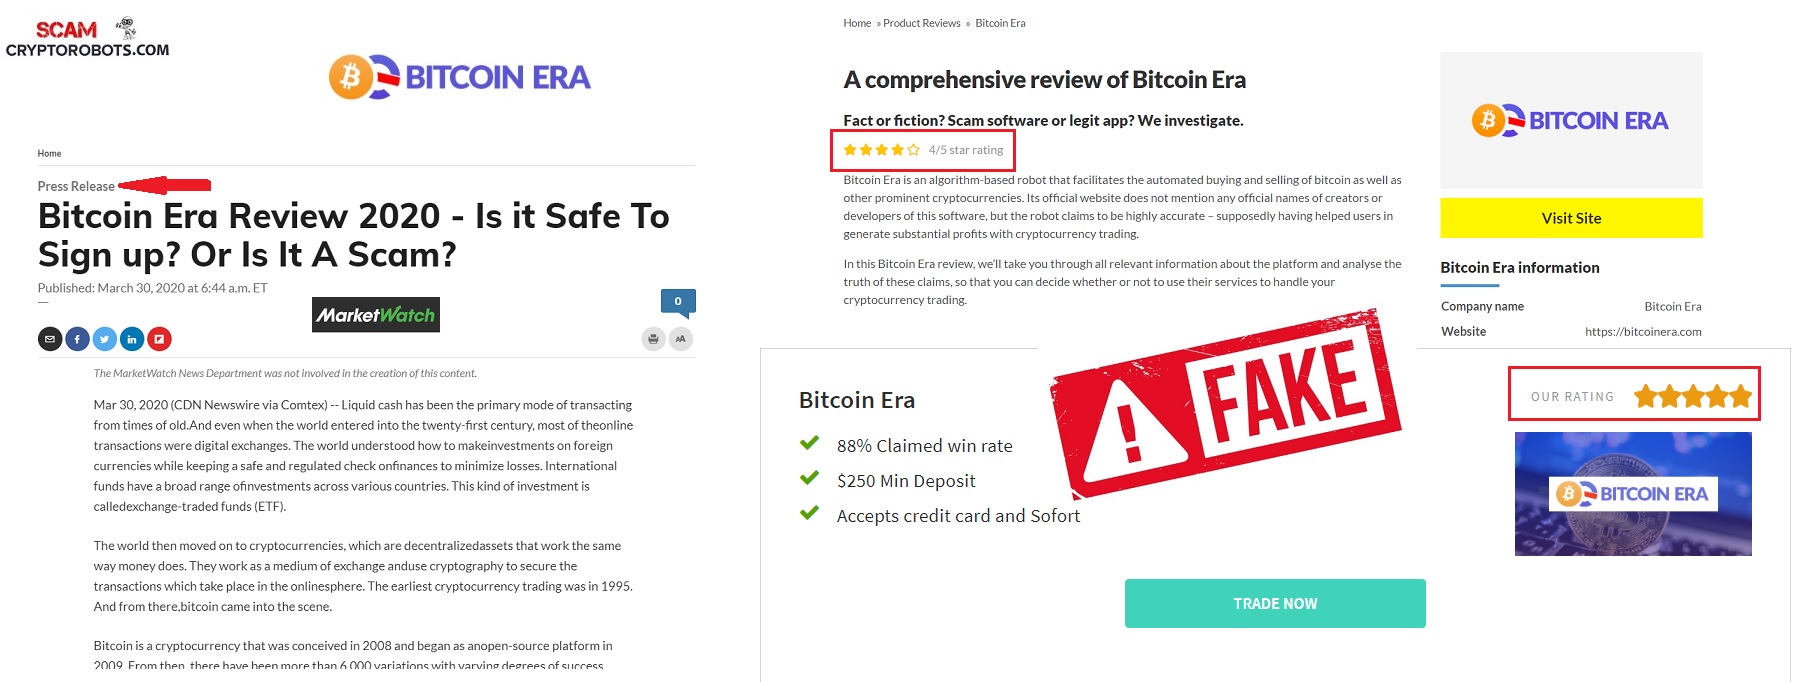 Bitcoin Era Review Scam App Exposed Scam Crypto Robots